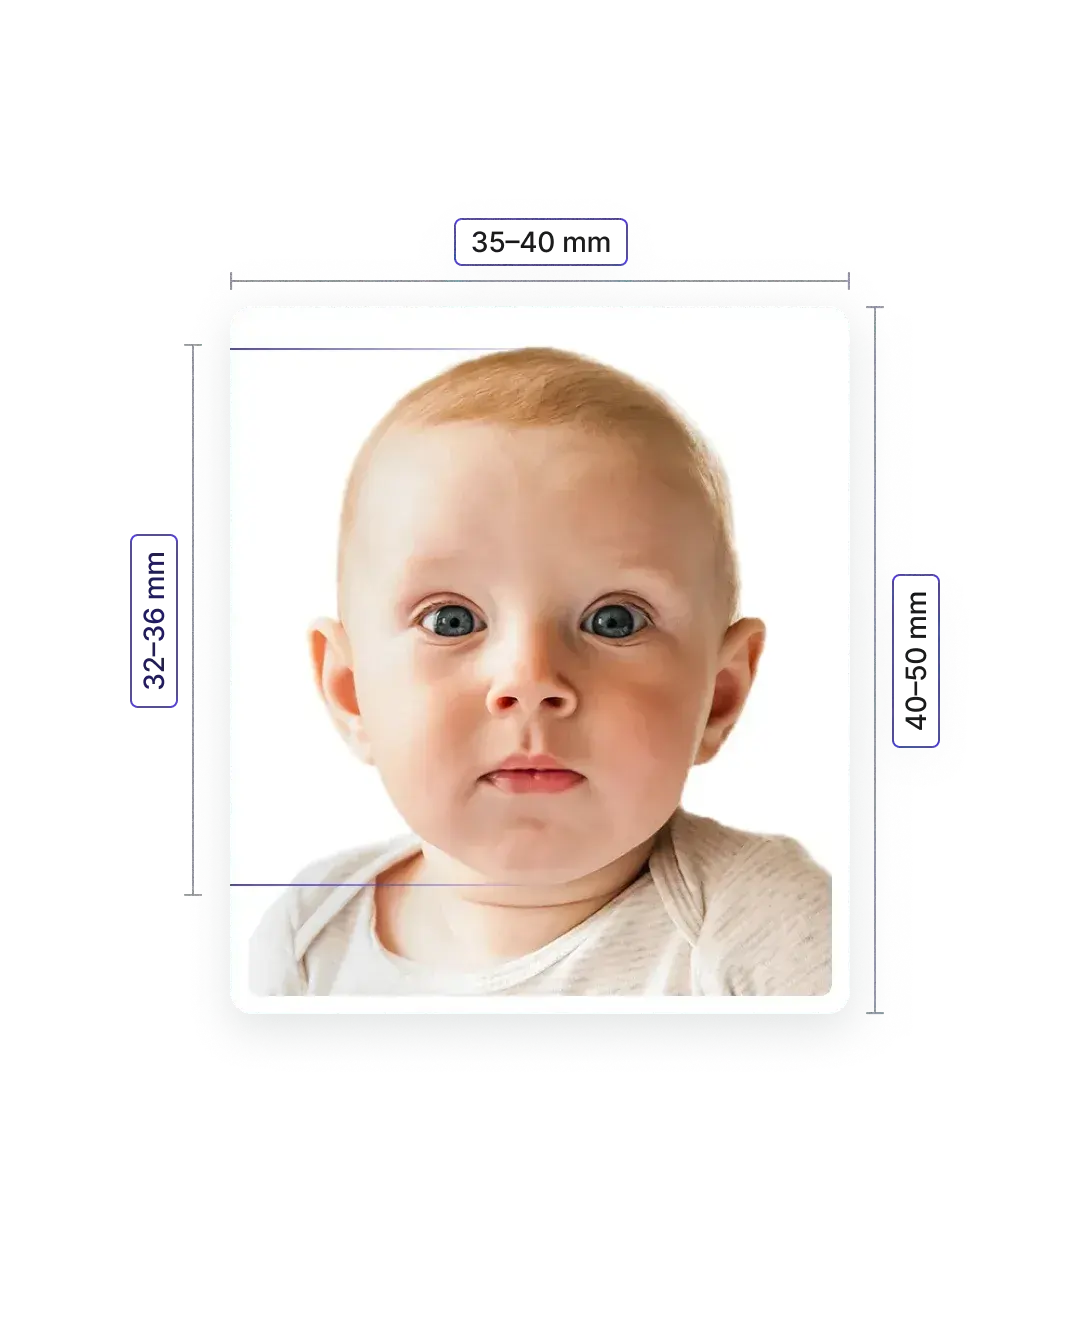 Australia Baby Passport Photo - Size & Requirements